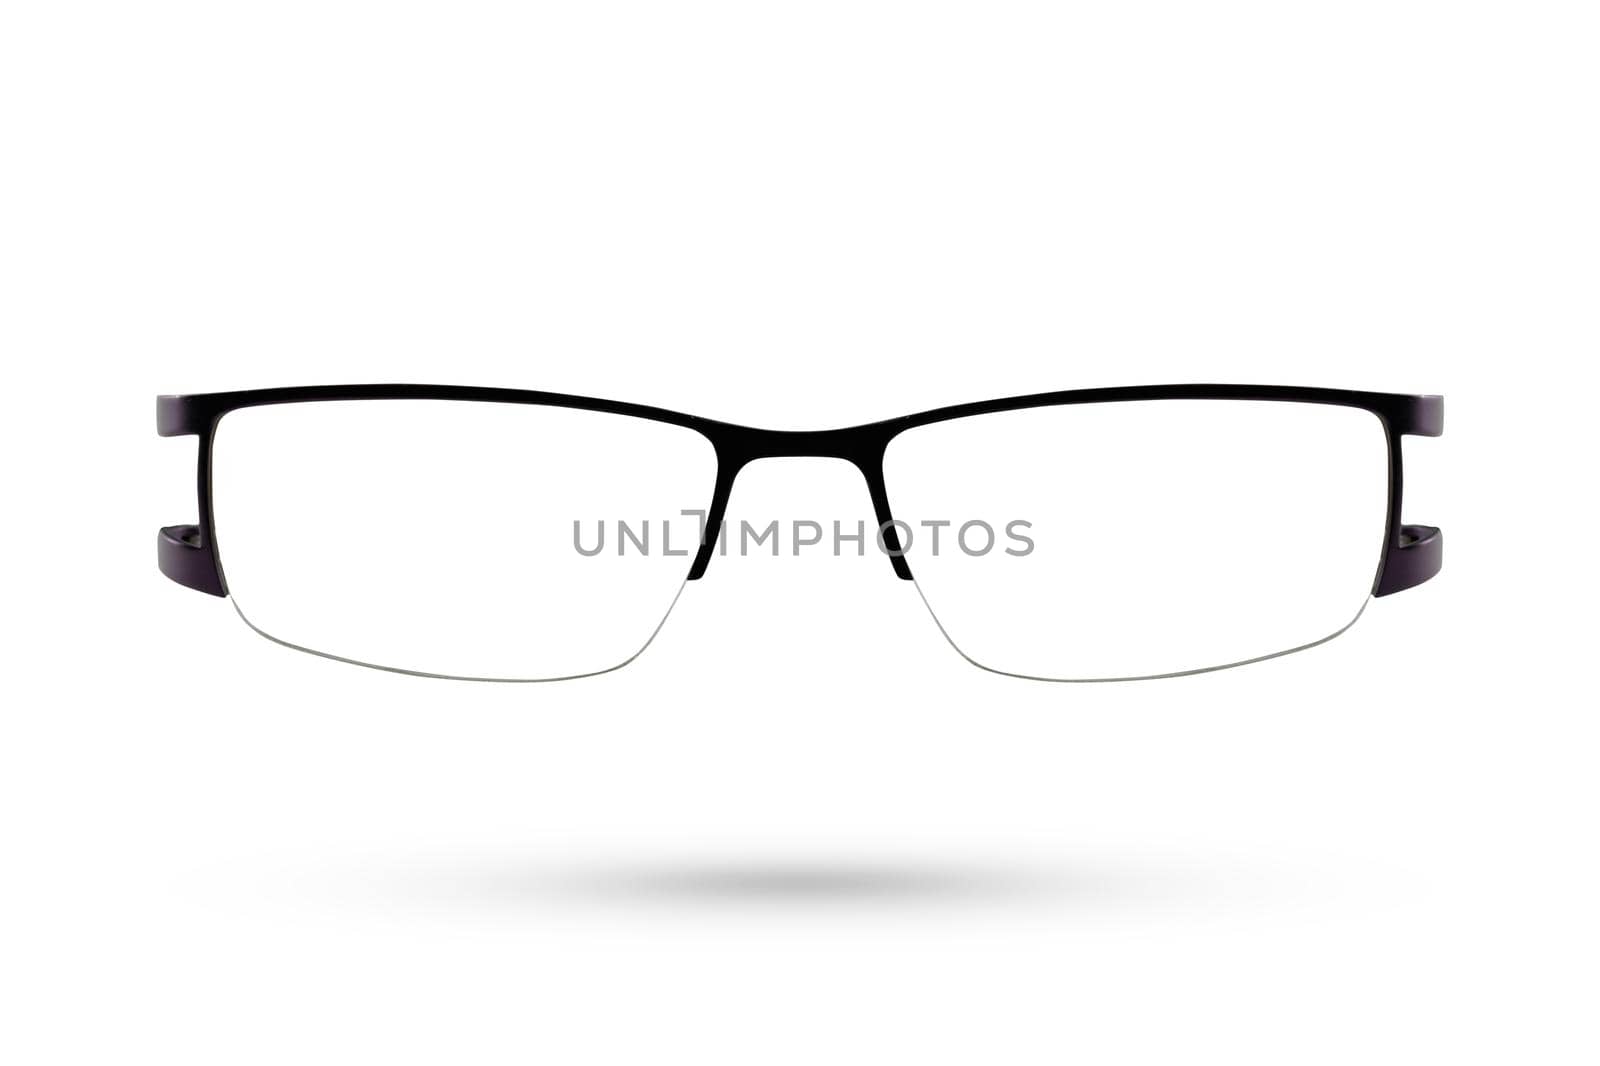 Classic Fashion eyeglasses style isolated on white background. by jayzynism